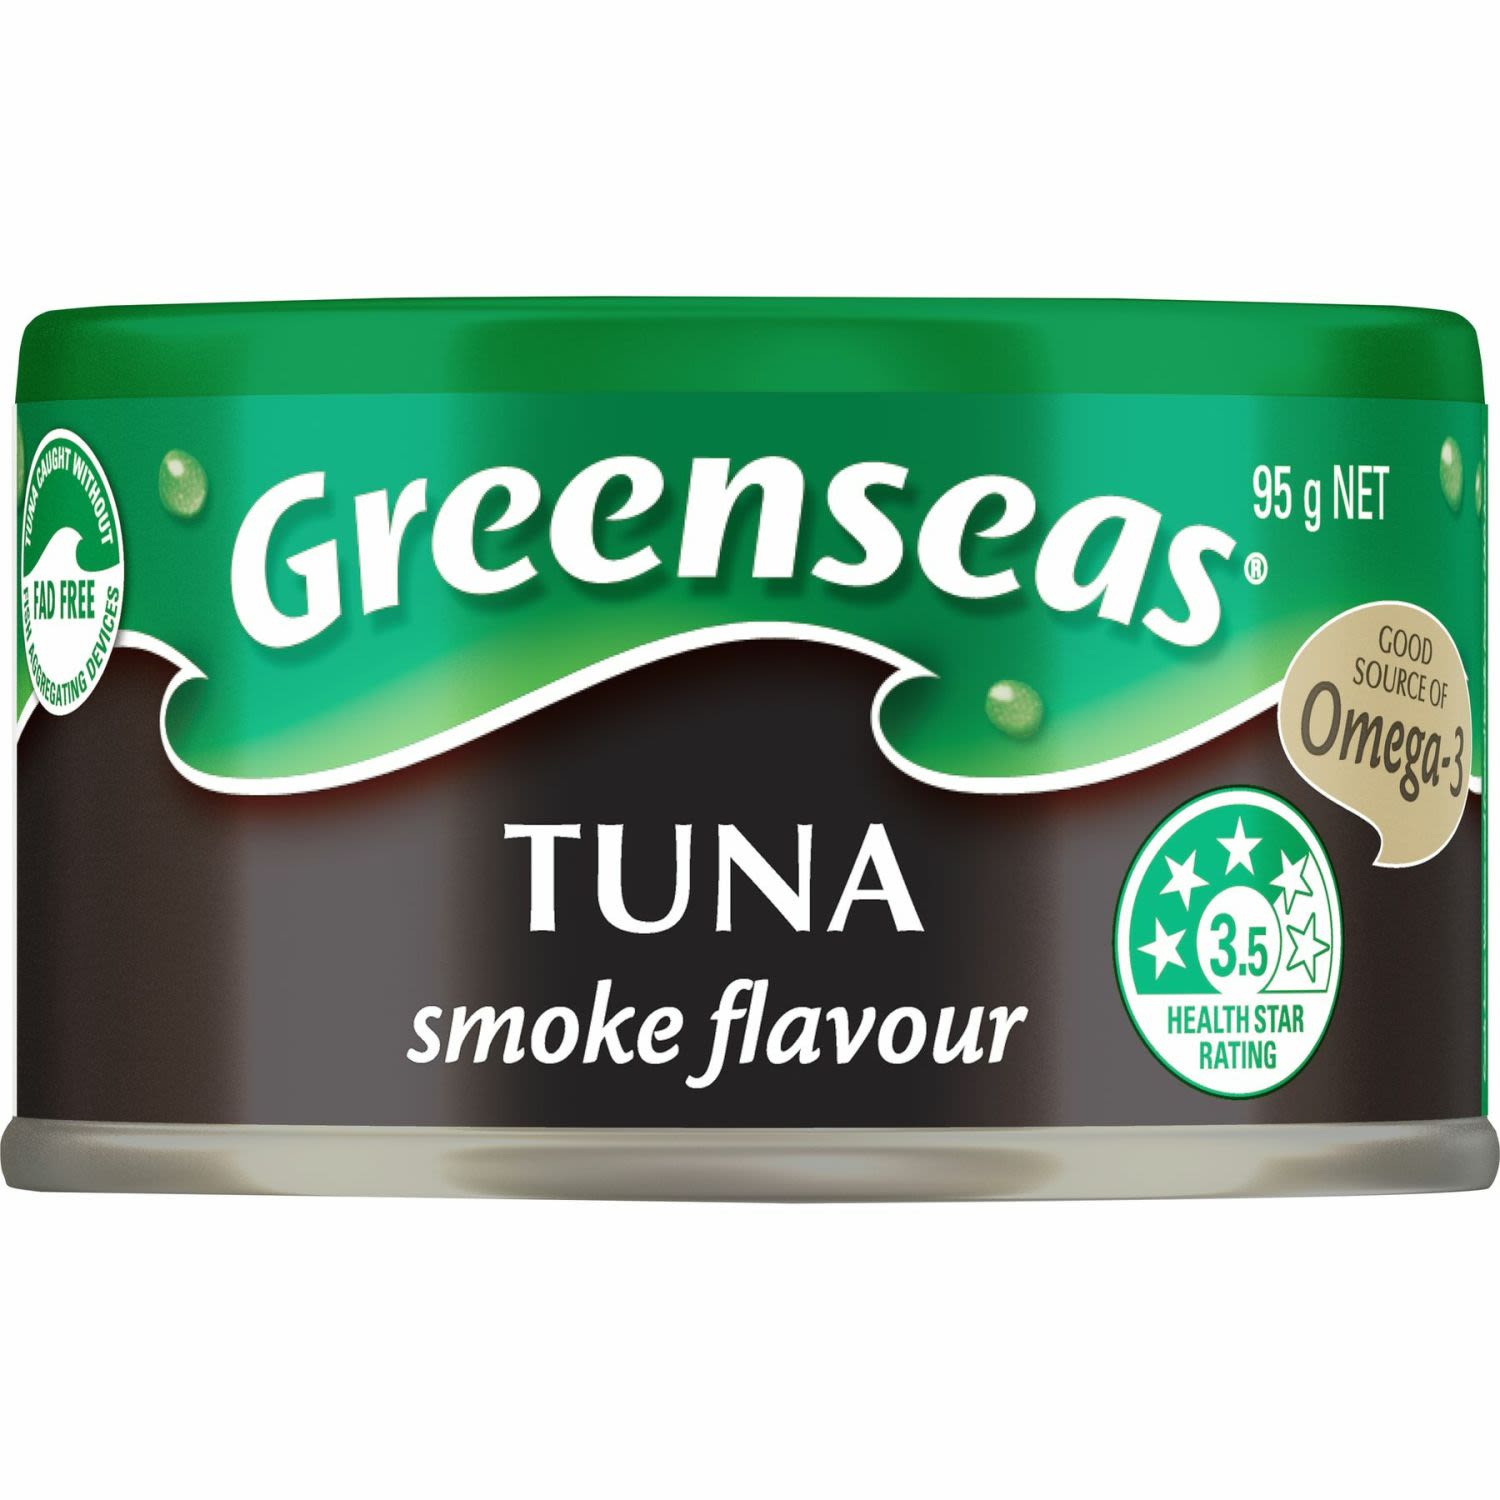 Greenseas Tuna Natural Smoked Flavour, 95 Gram